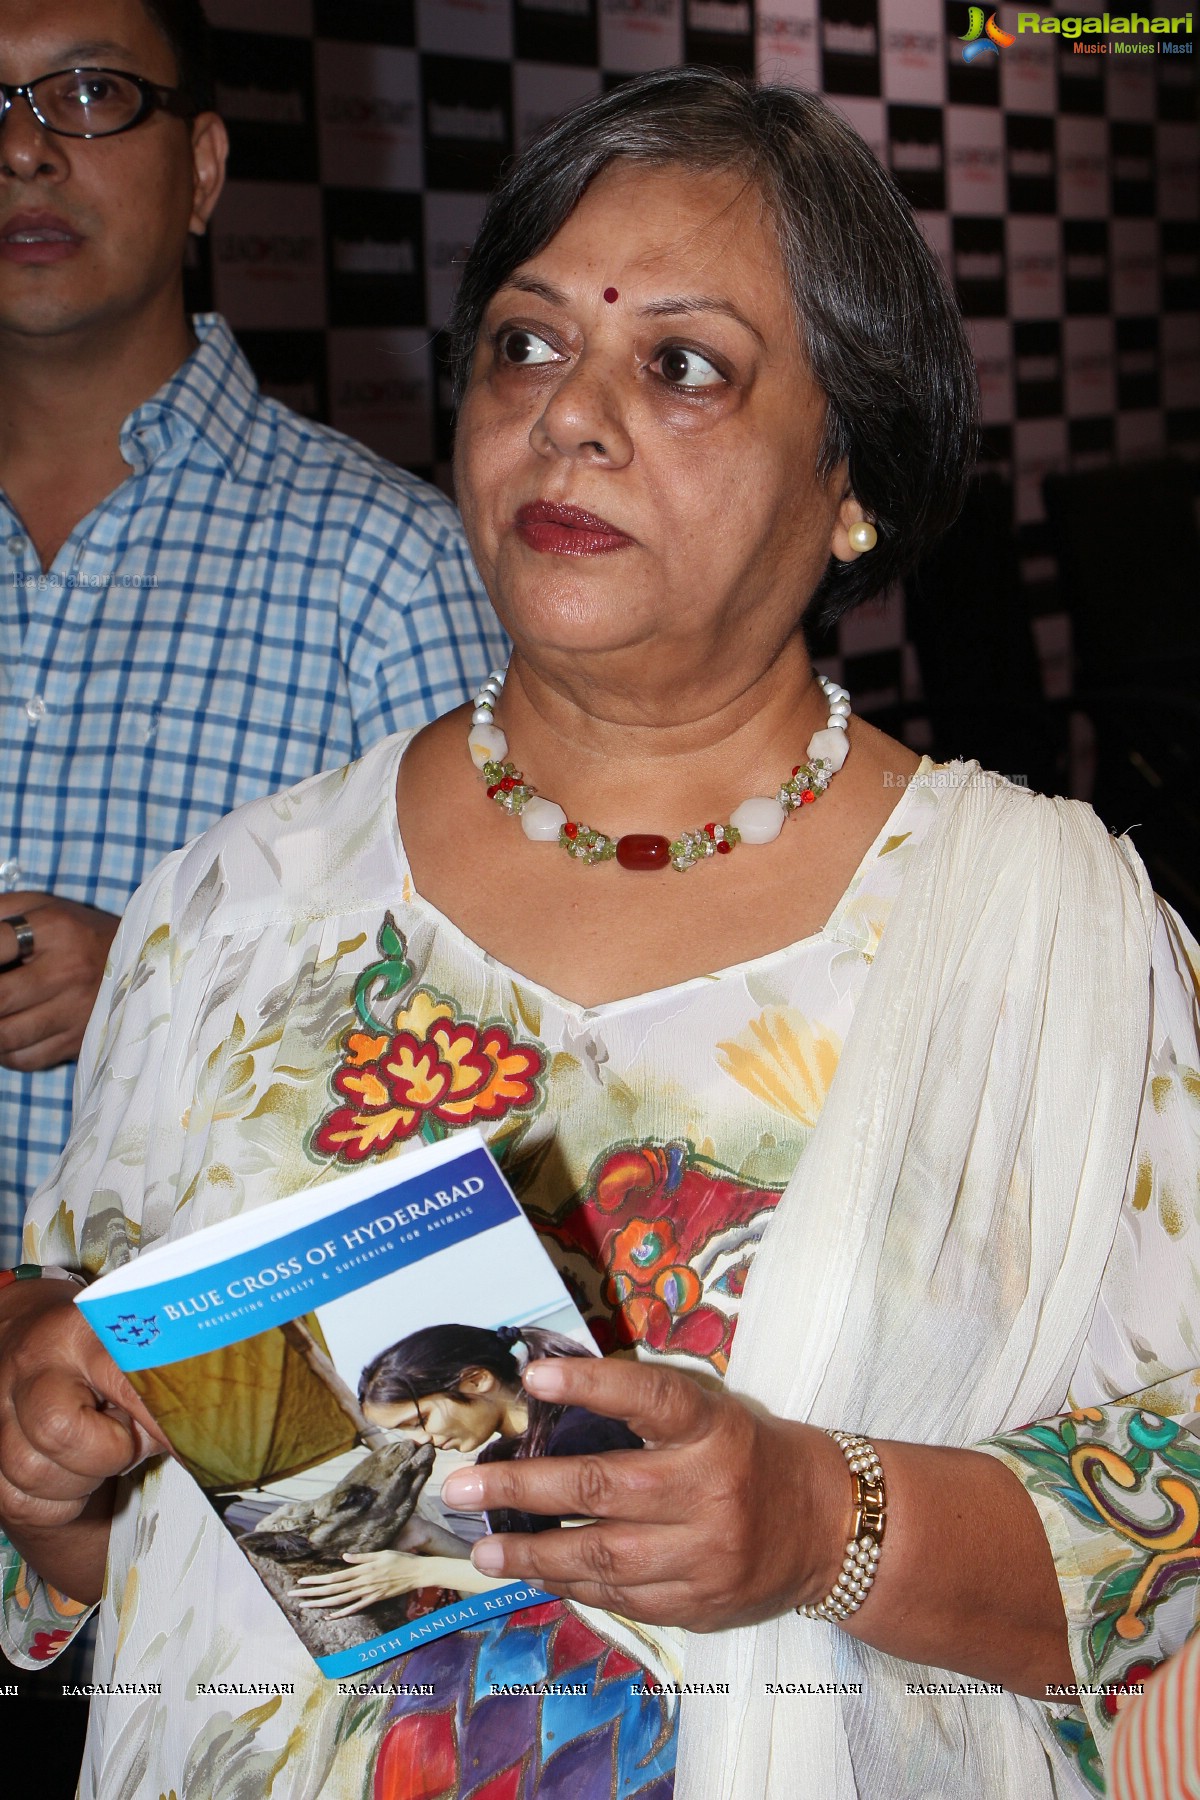 Amala and Suma launches 'Bonsai Kitten' Book at Landmark, Hyderabad